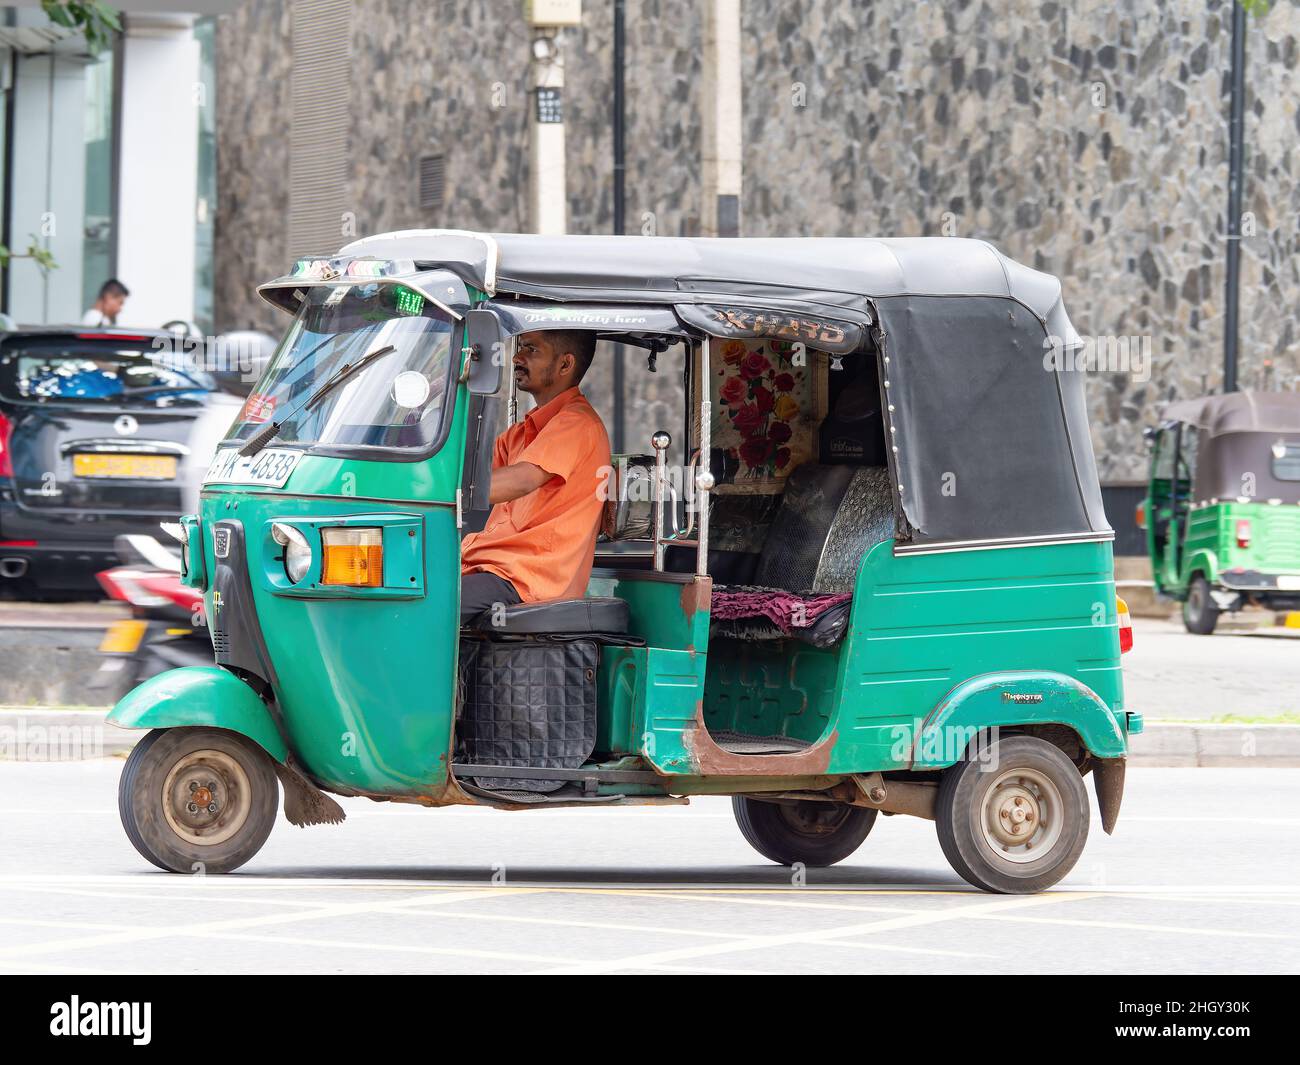 Green auto rickshaw, also called tuk-tuk, in Colombo, Sri Lanka Stock Photo